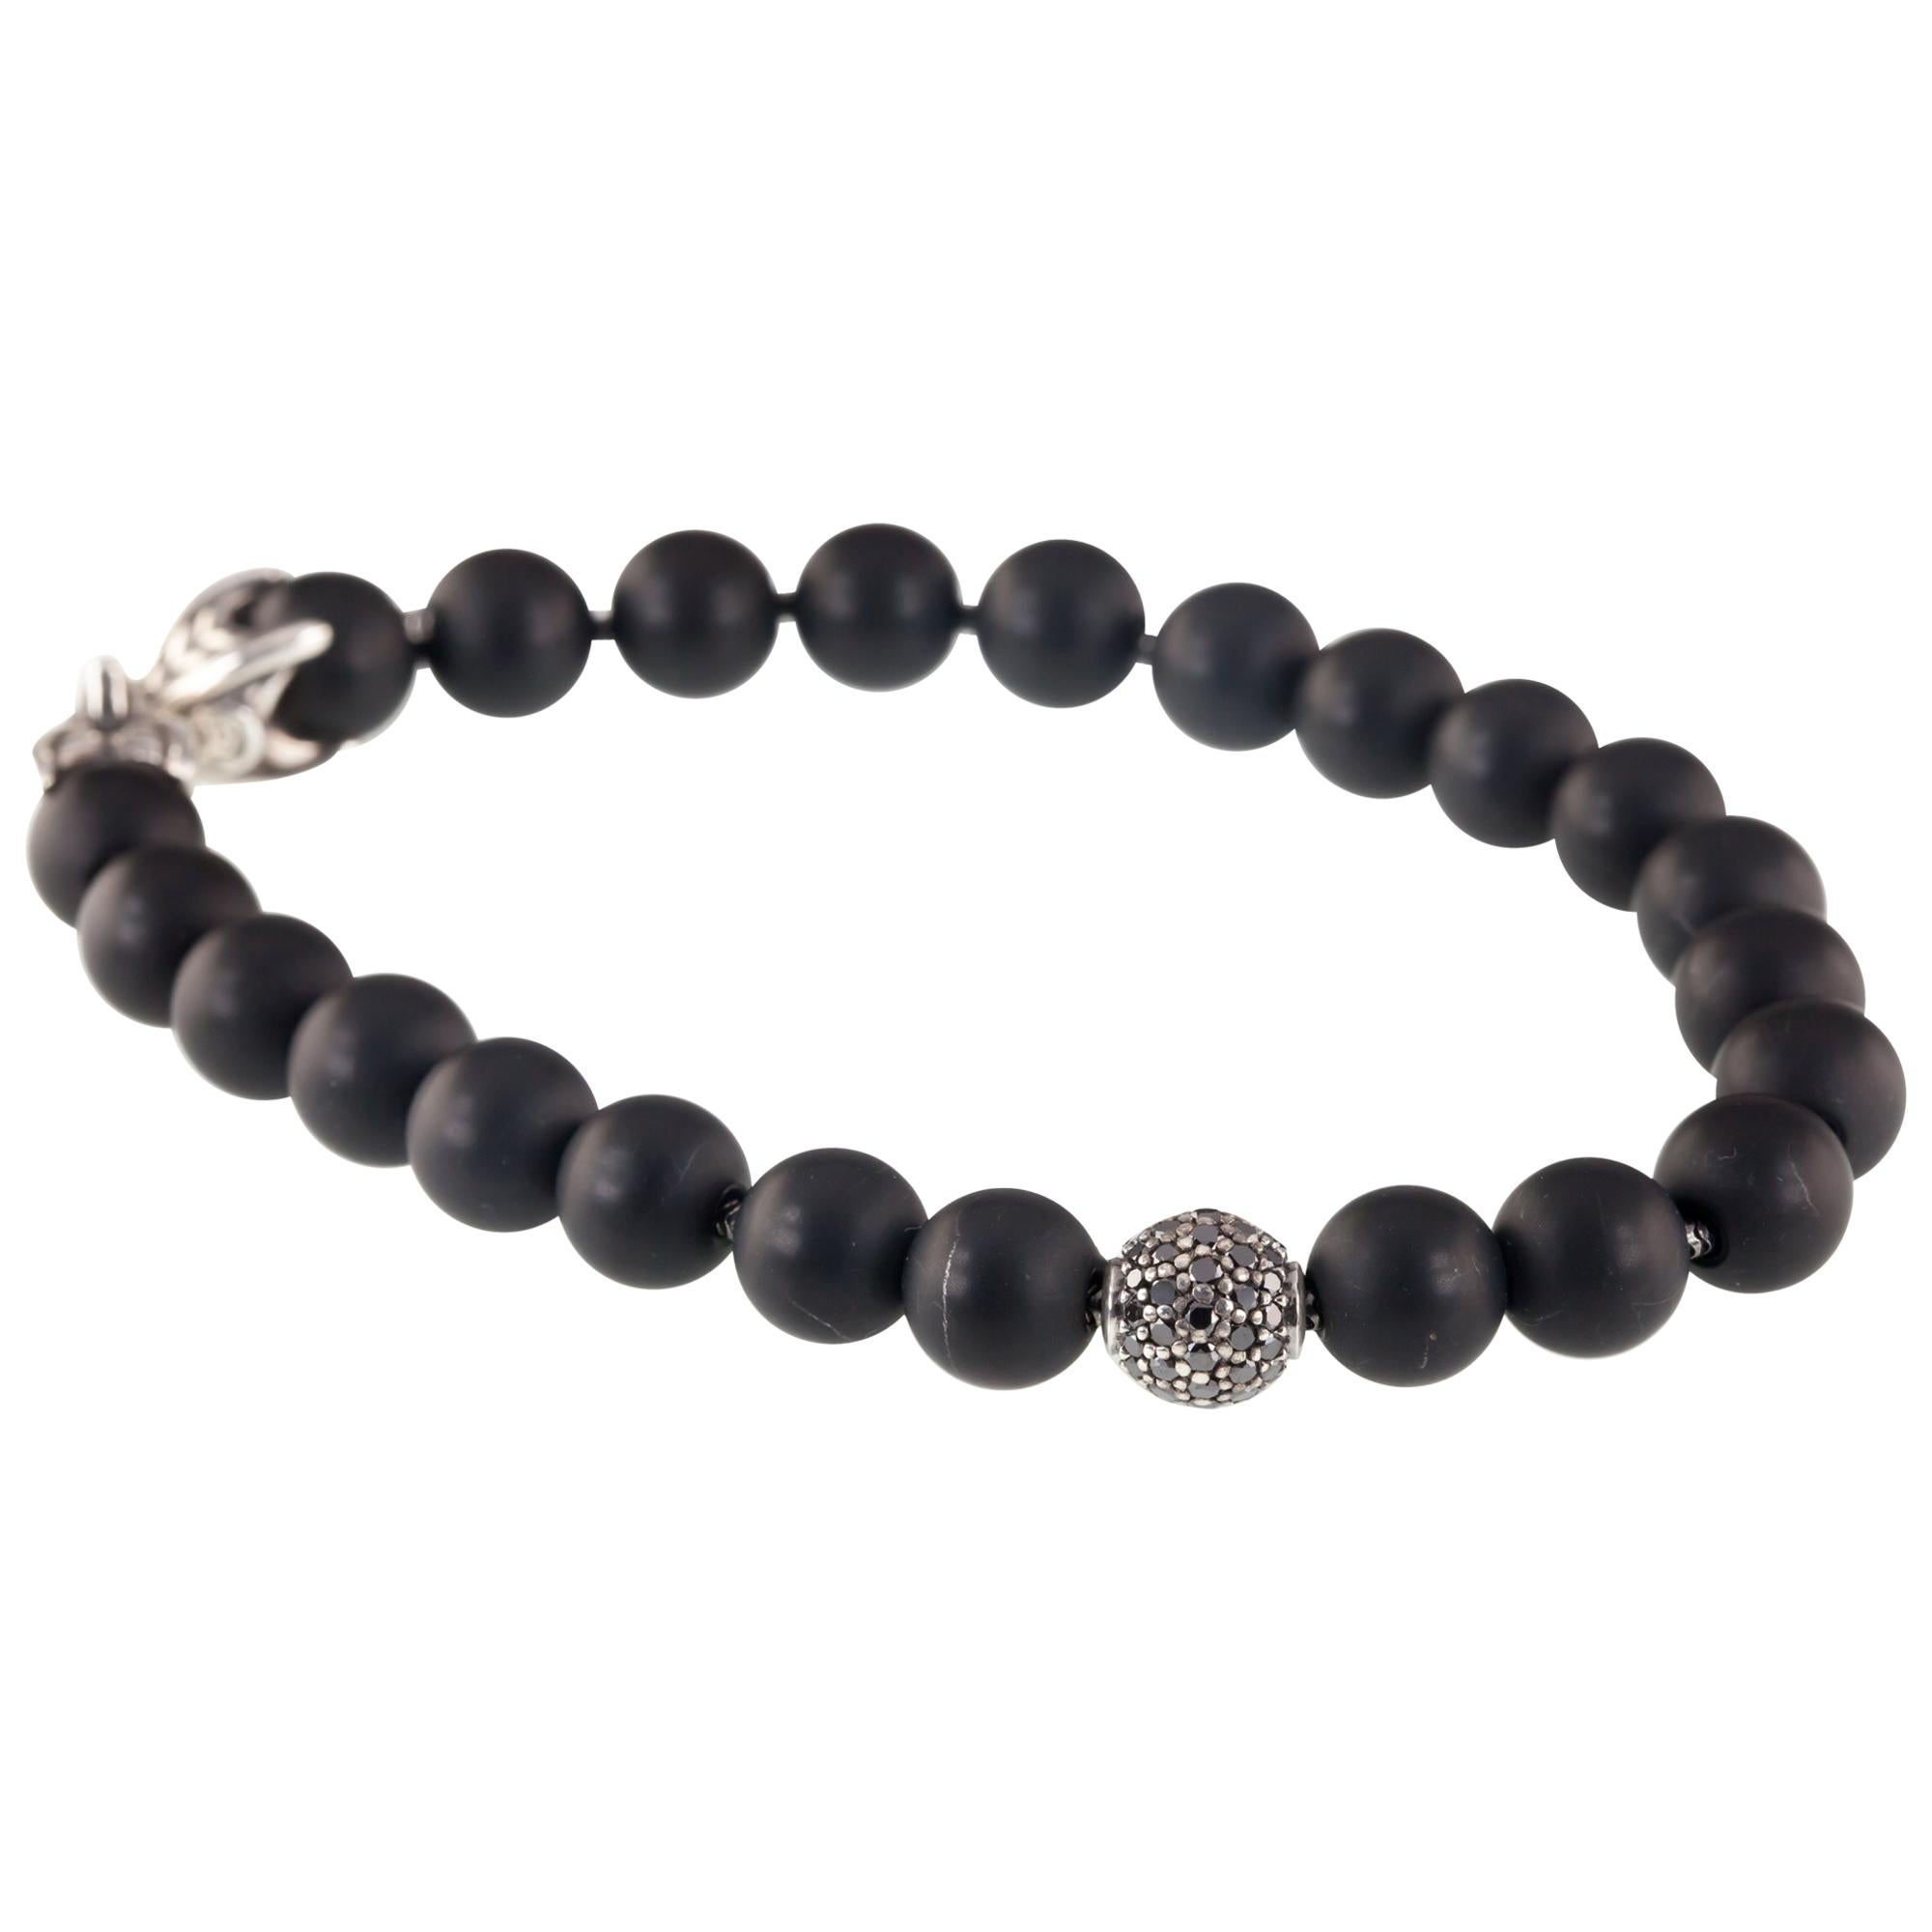 $425 David Yurman Sterling Silver 925 Spiritual Beads Bracelets Adjustable 